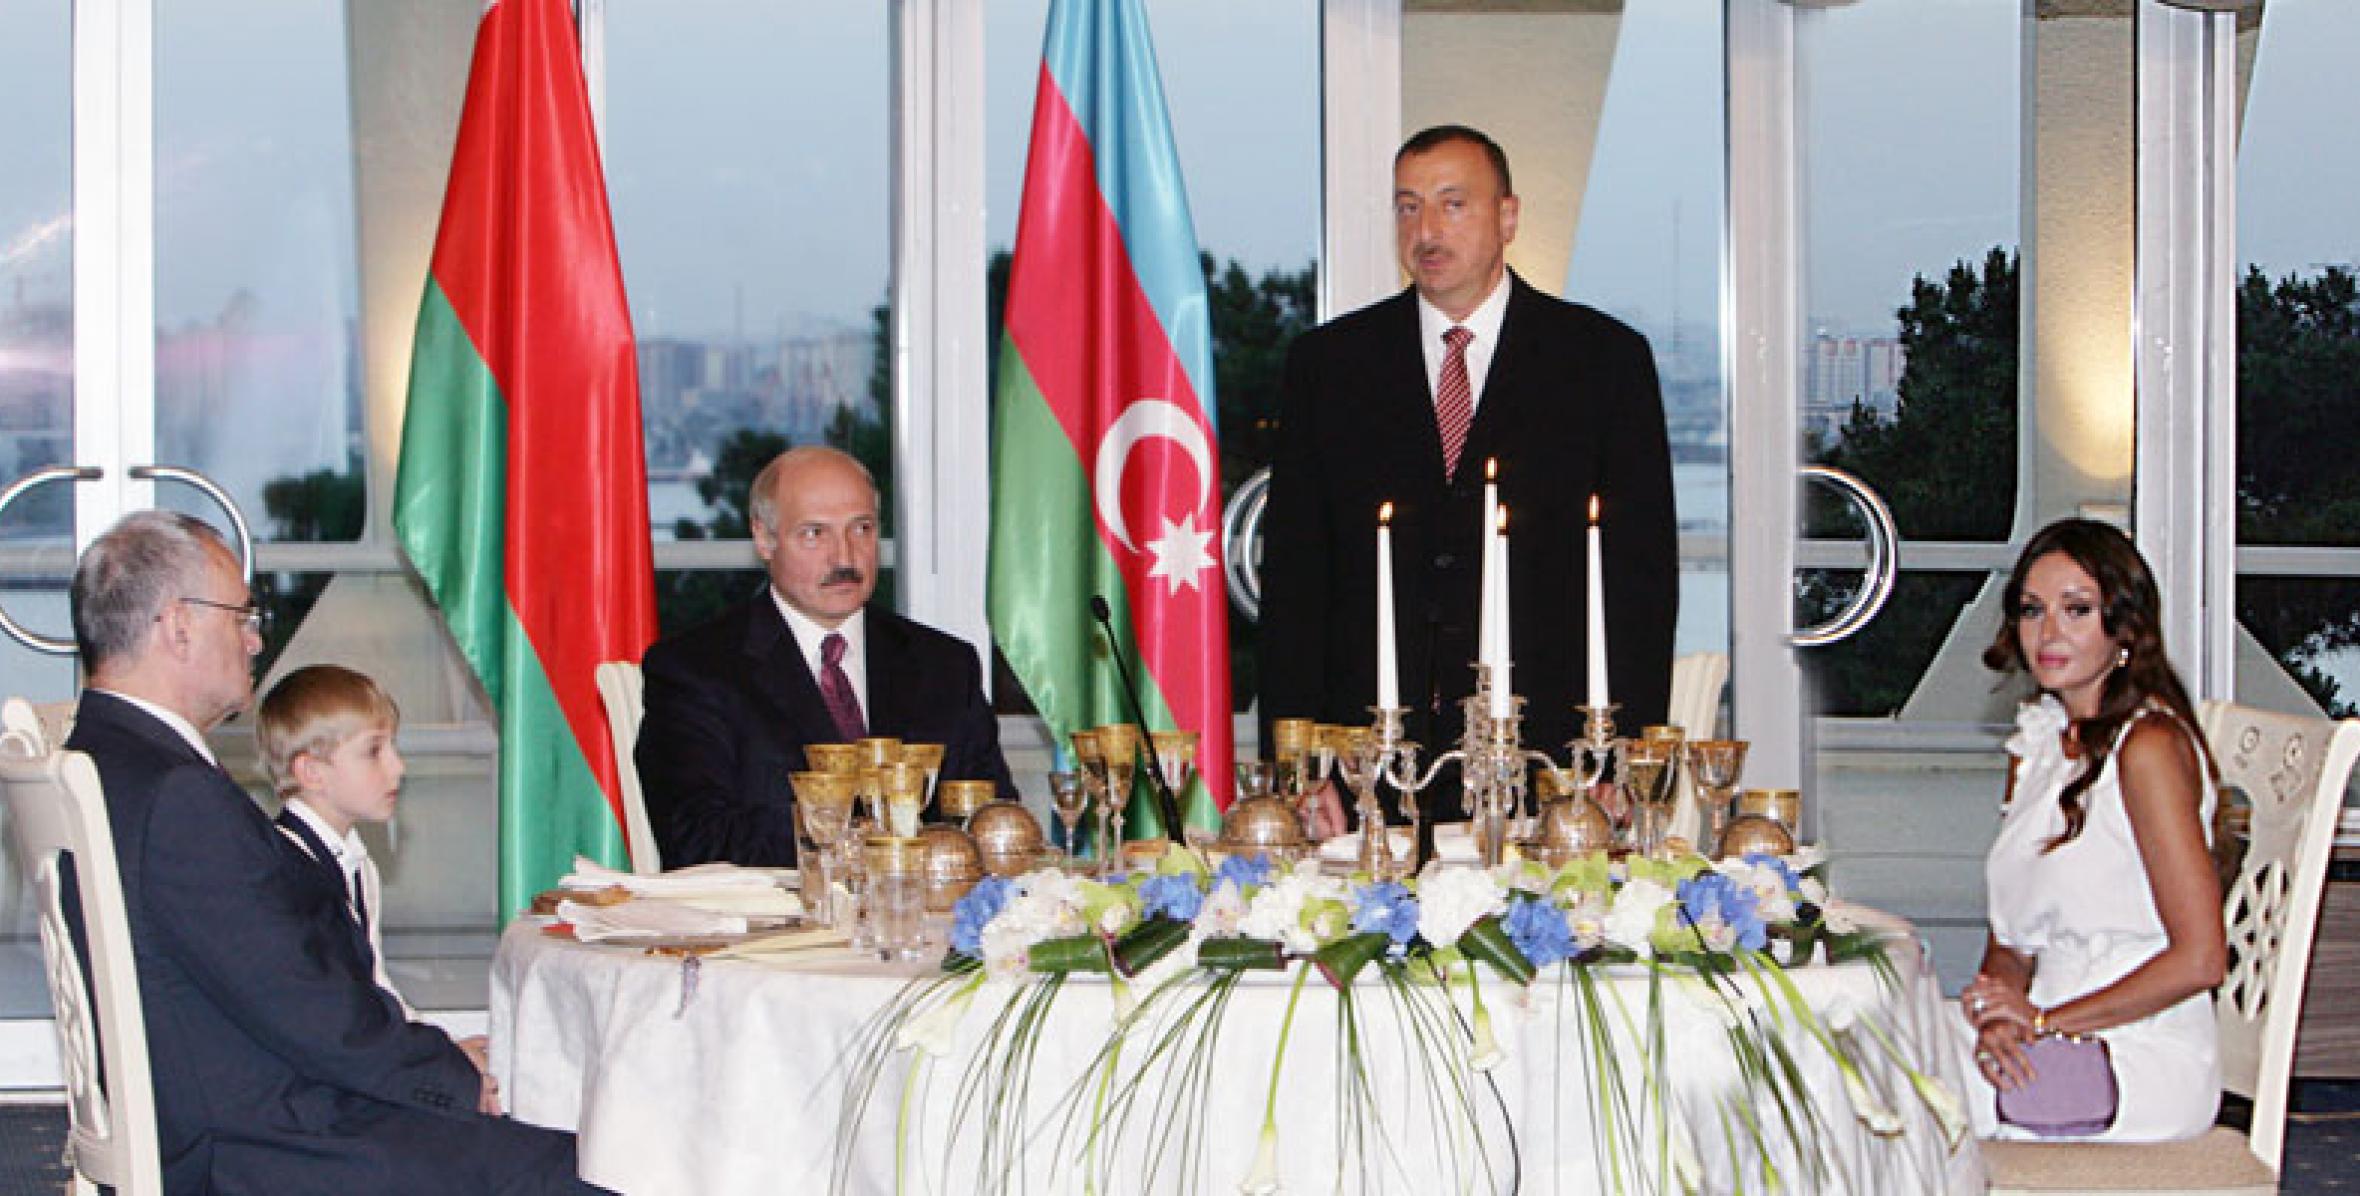 Official dinner was hosted in honor of Belarusian President Alexander Lukashenko